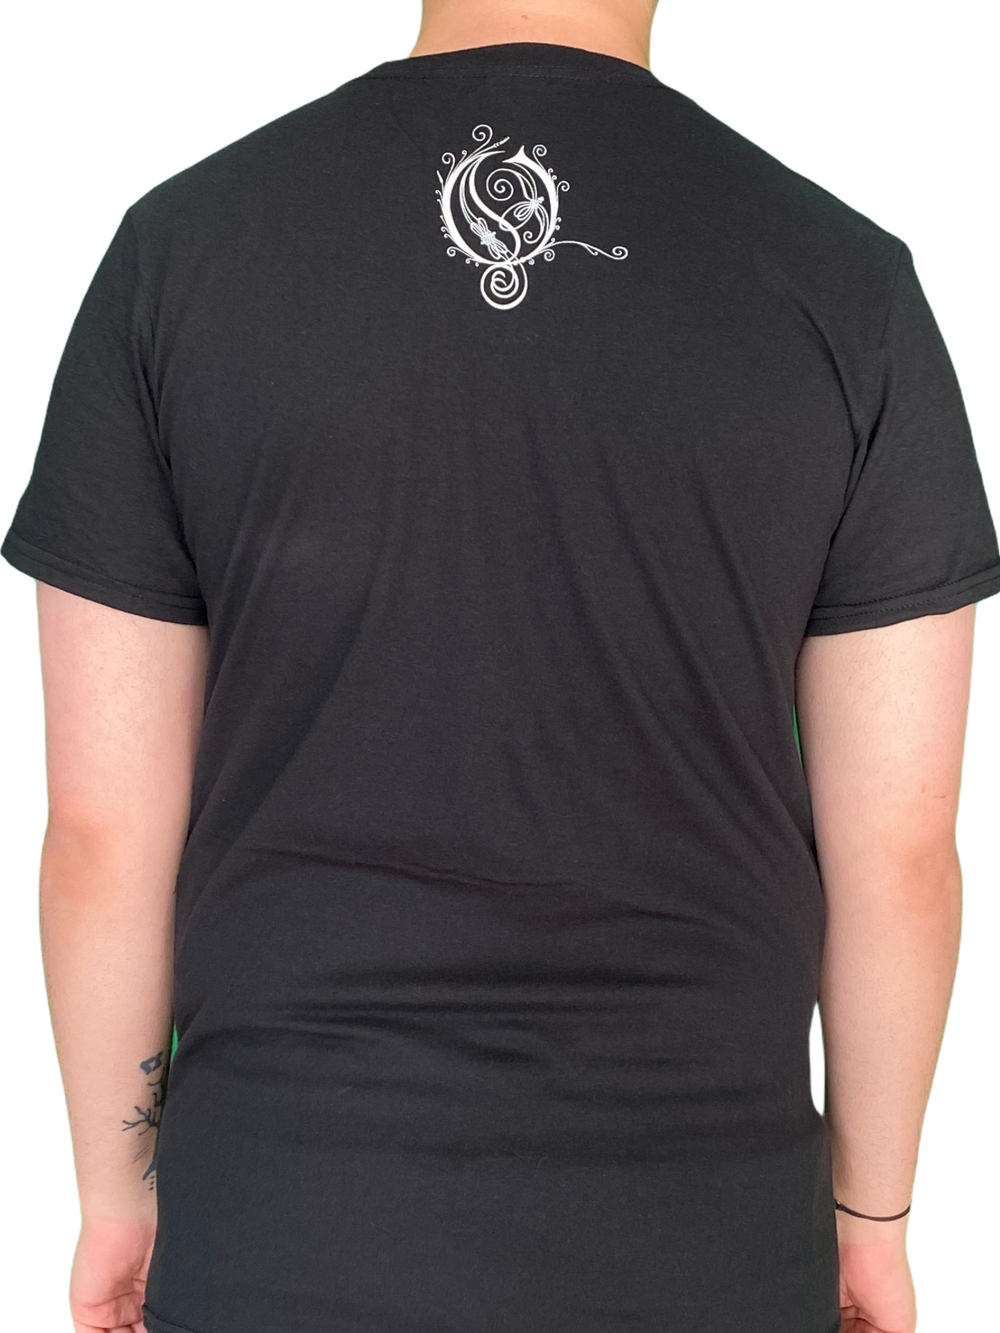 Opeth In Cauda Venenum Official T Shirt Brand New Various Sizes